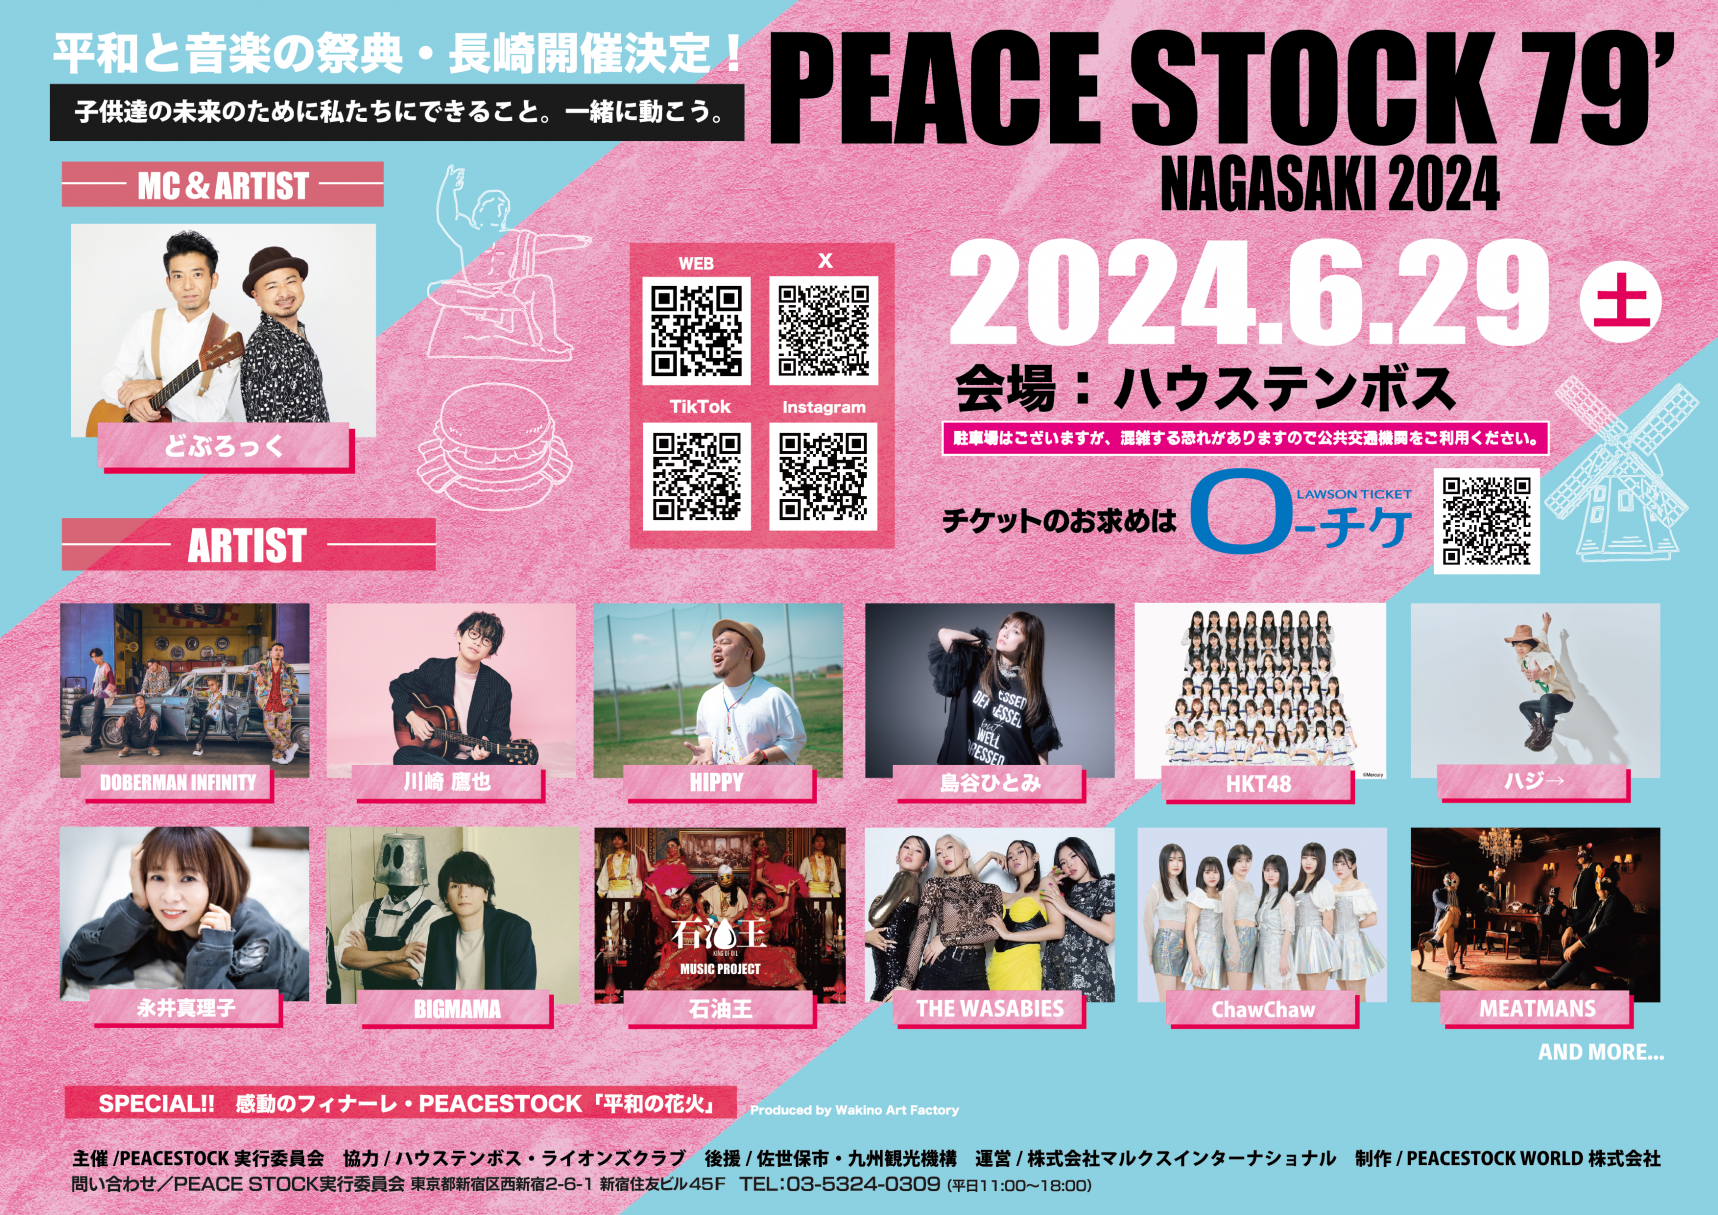 PEACE STOCK 79’NAGASAKI 2024-1